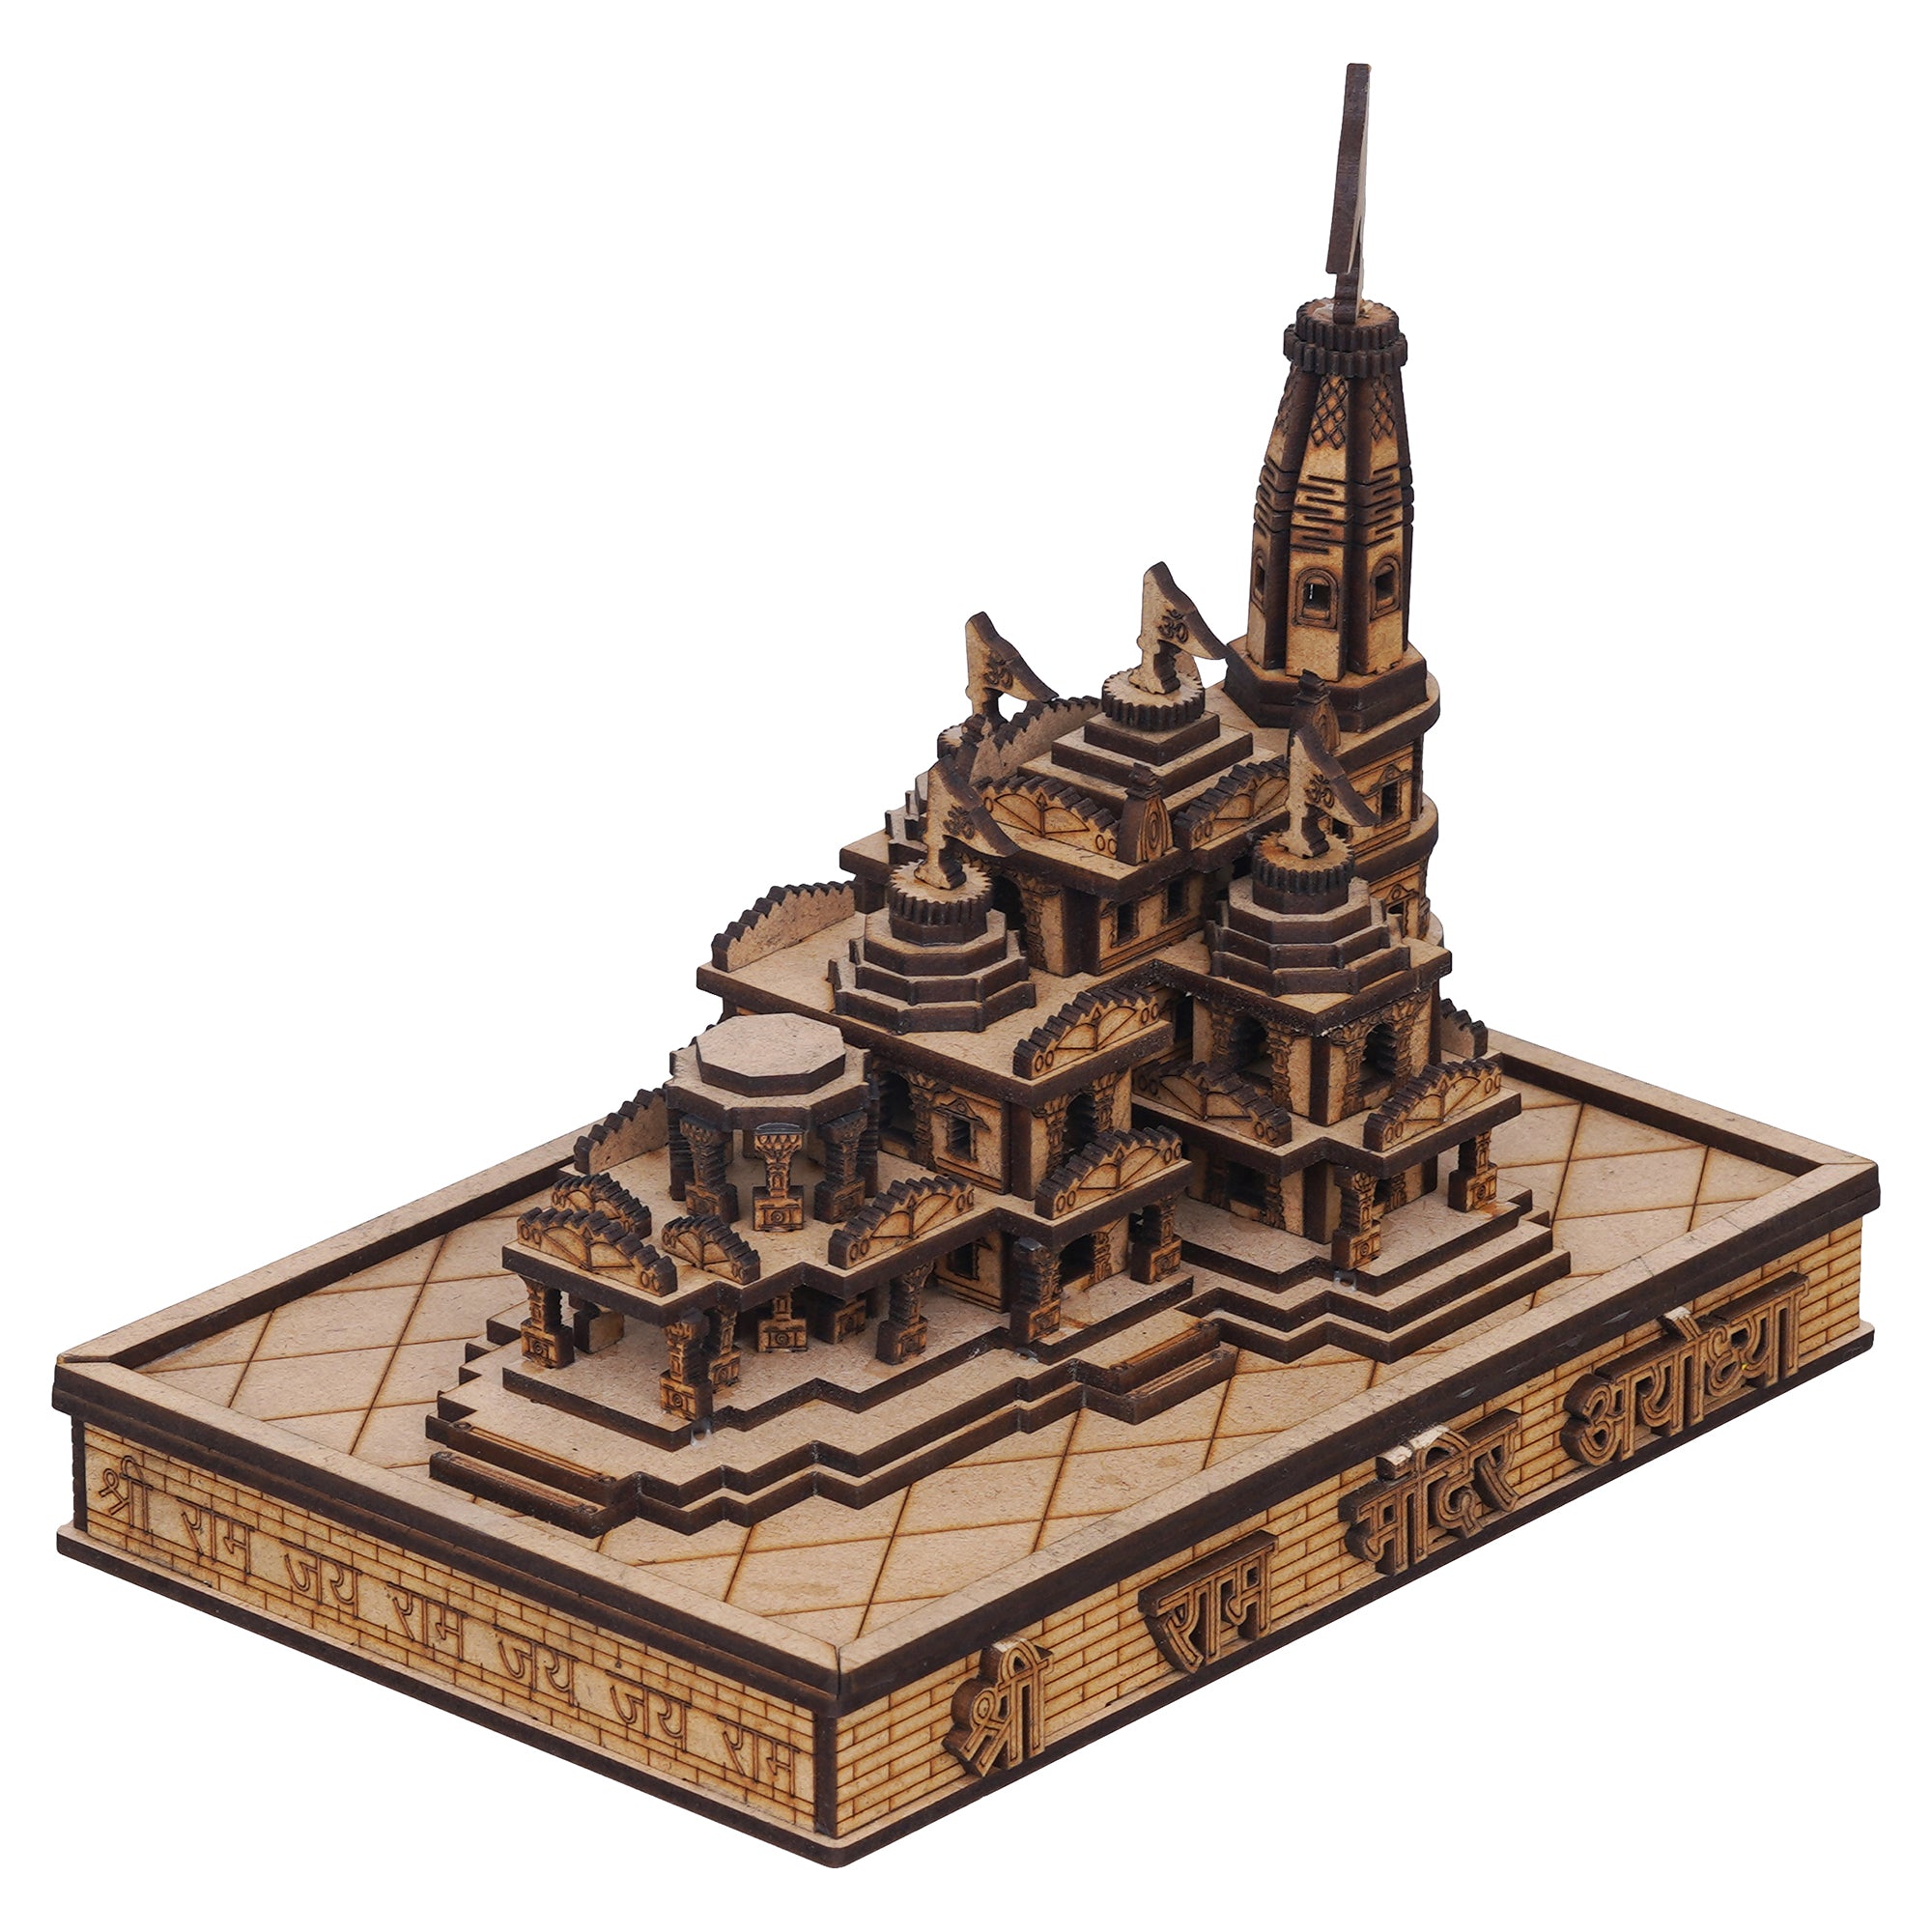 eCraftIndia Shri Ram Mandir Ayodhya Model - Wooden MDF Craftsmanship Authentic Designer Temple - Ideal for Home Temple, Decor, and Spiritual Gifting (Beige, Brown) 6